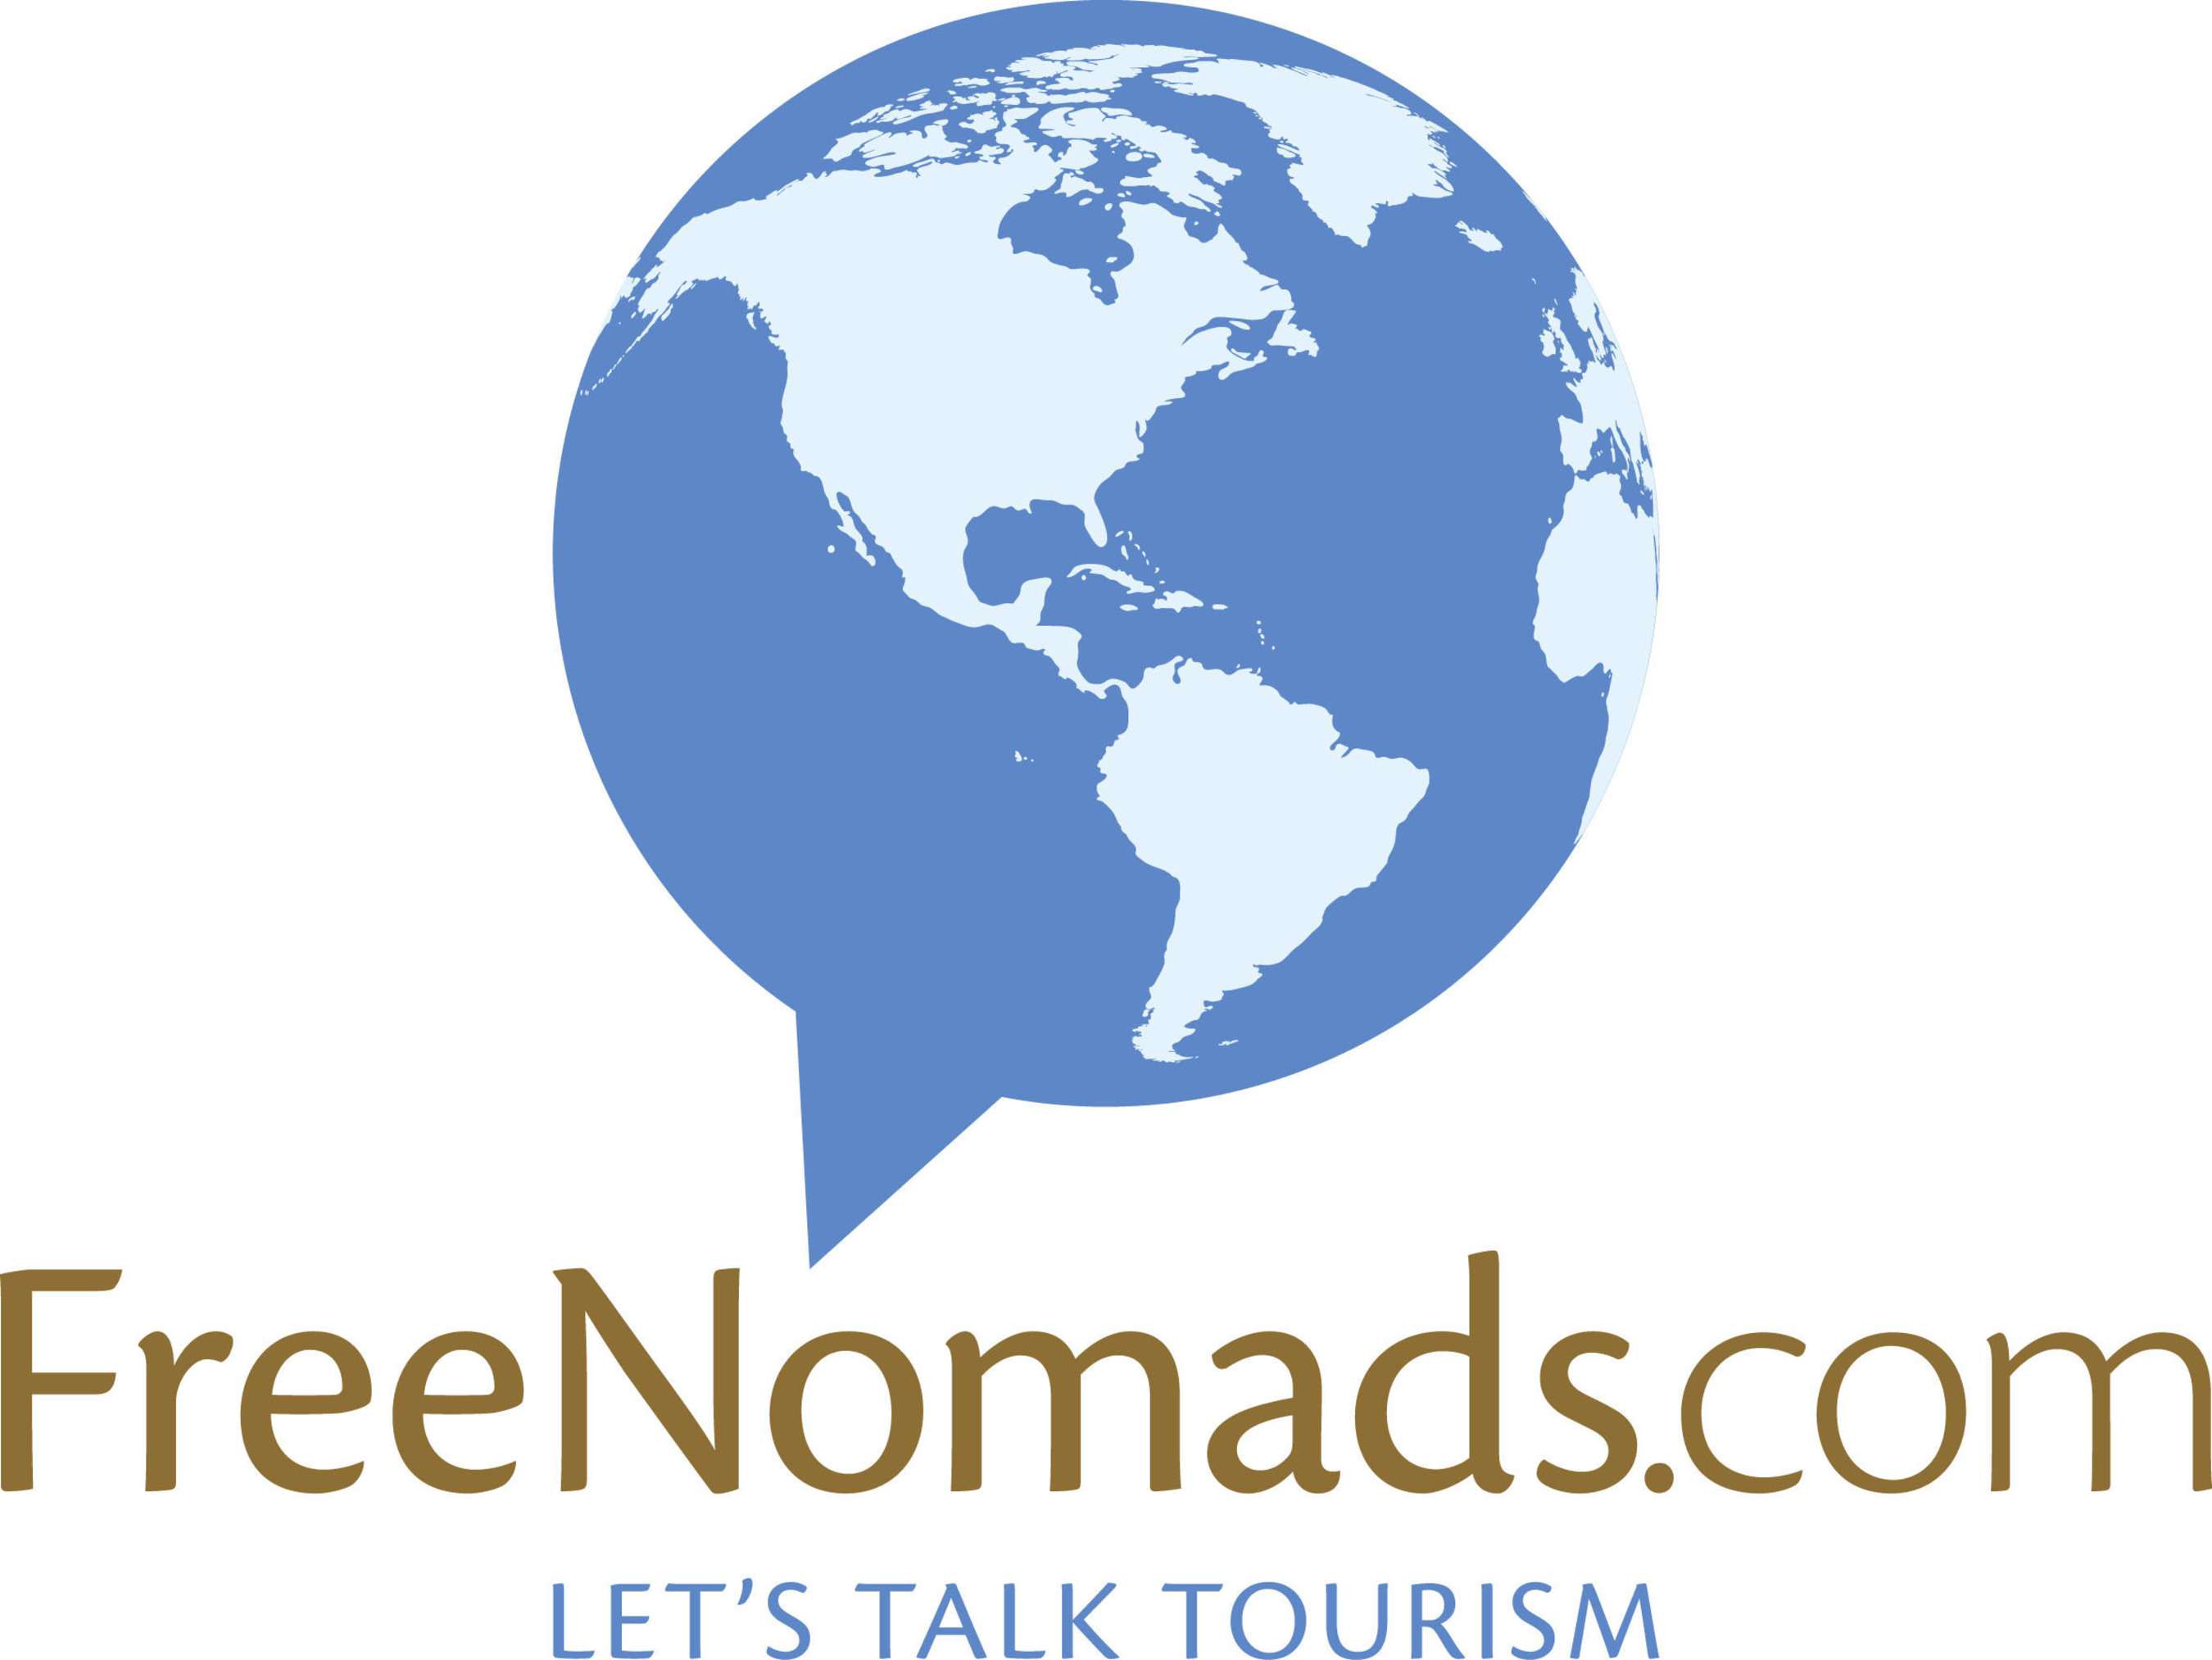 FreeNomads logo. (PRNewsFoto/FreeNomads.com) (PRNewsFoto/FREENOMADS.COM)